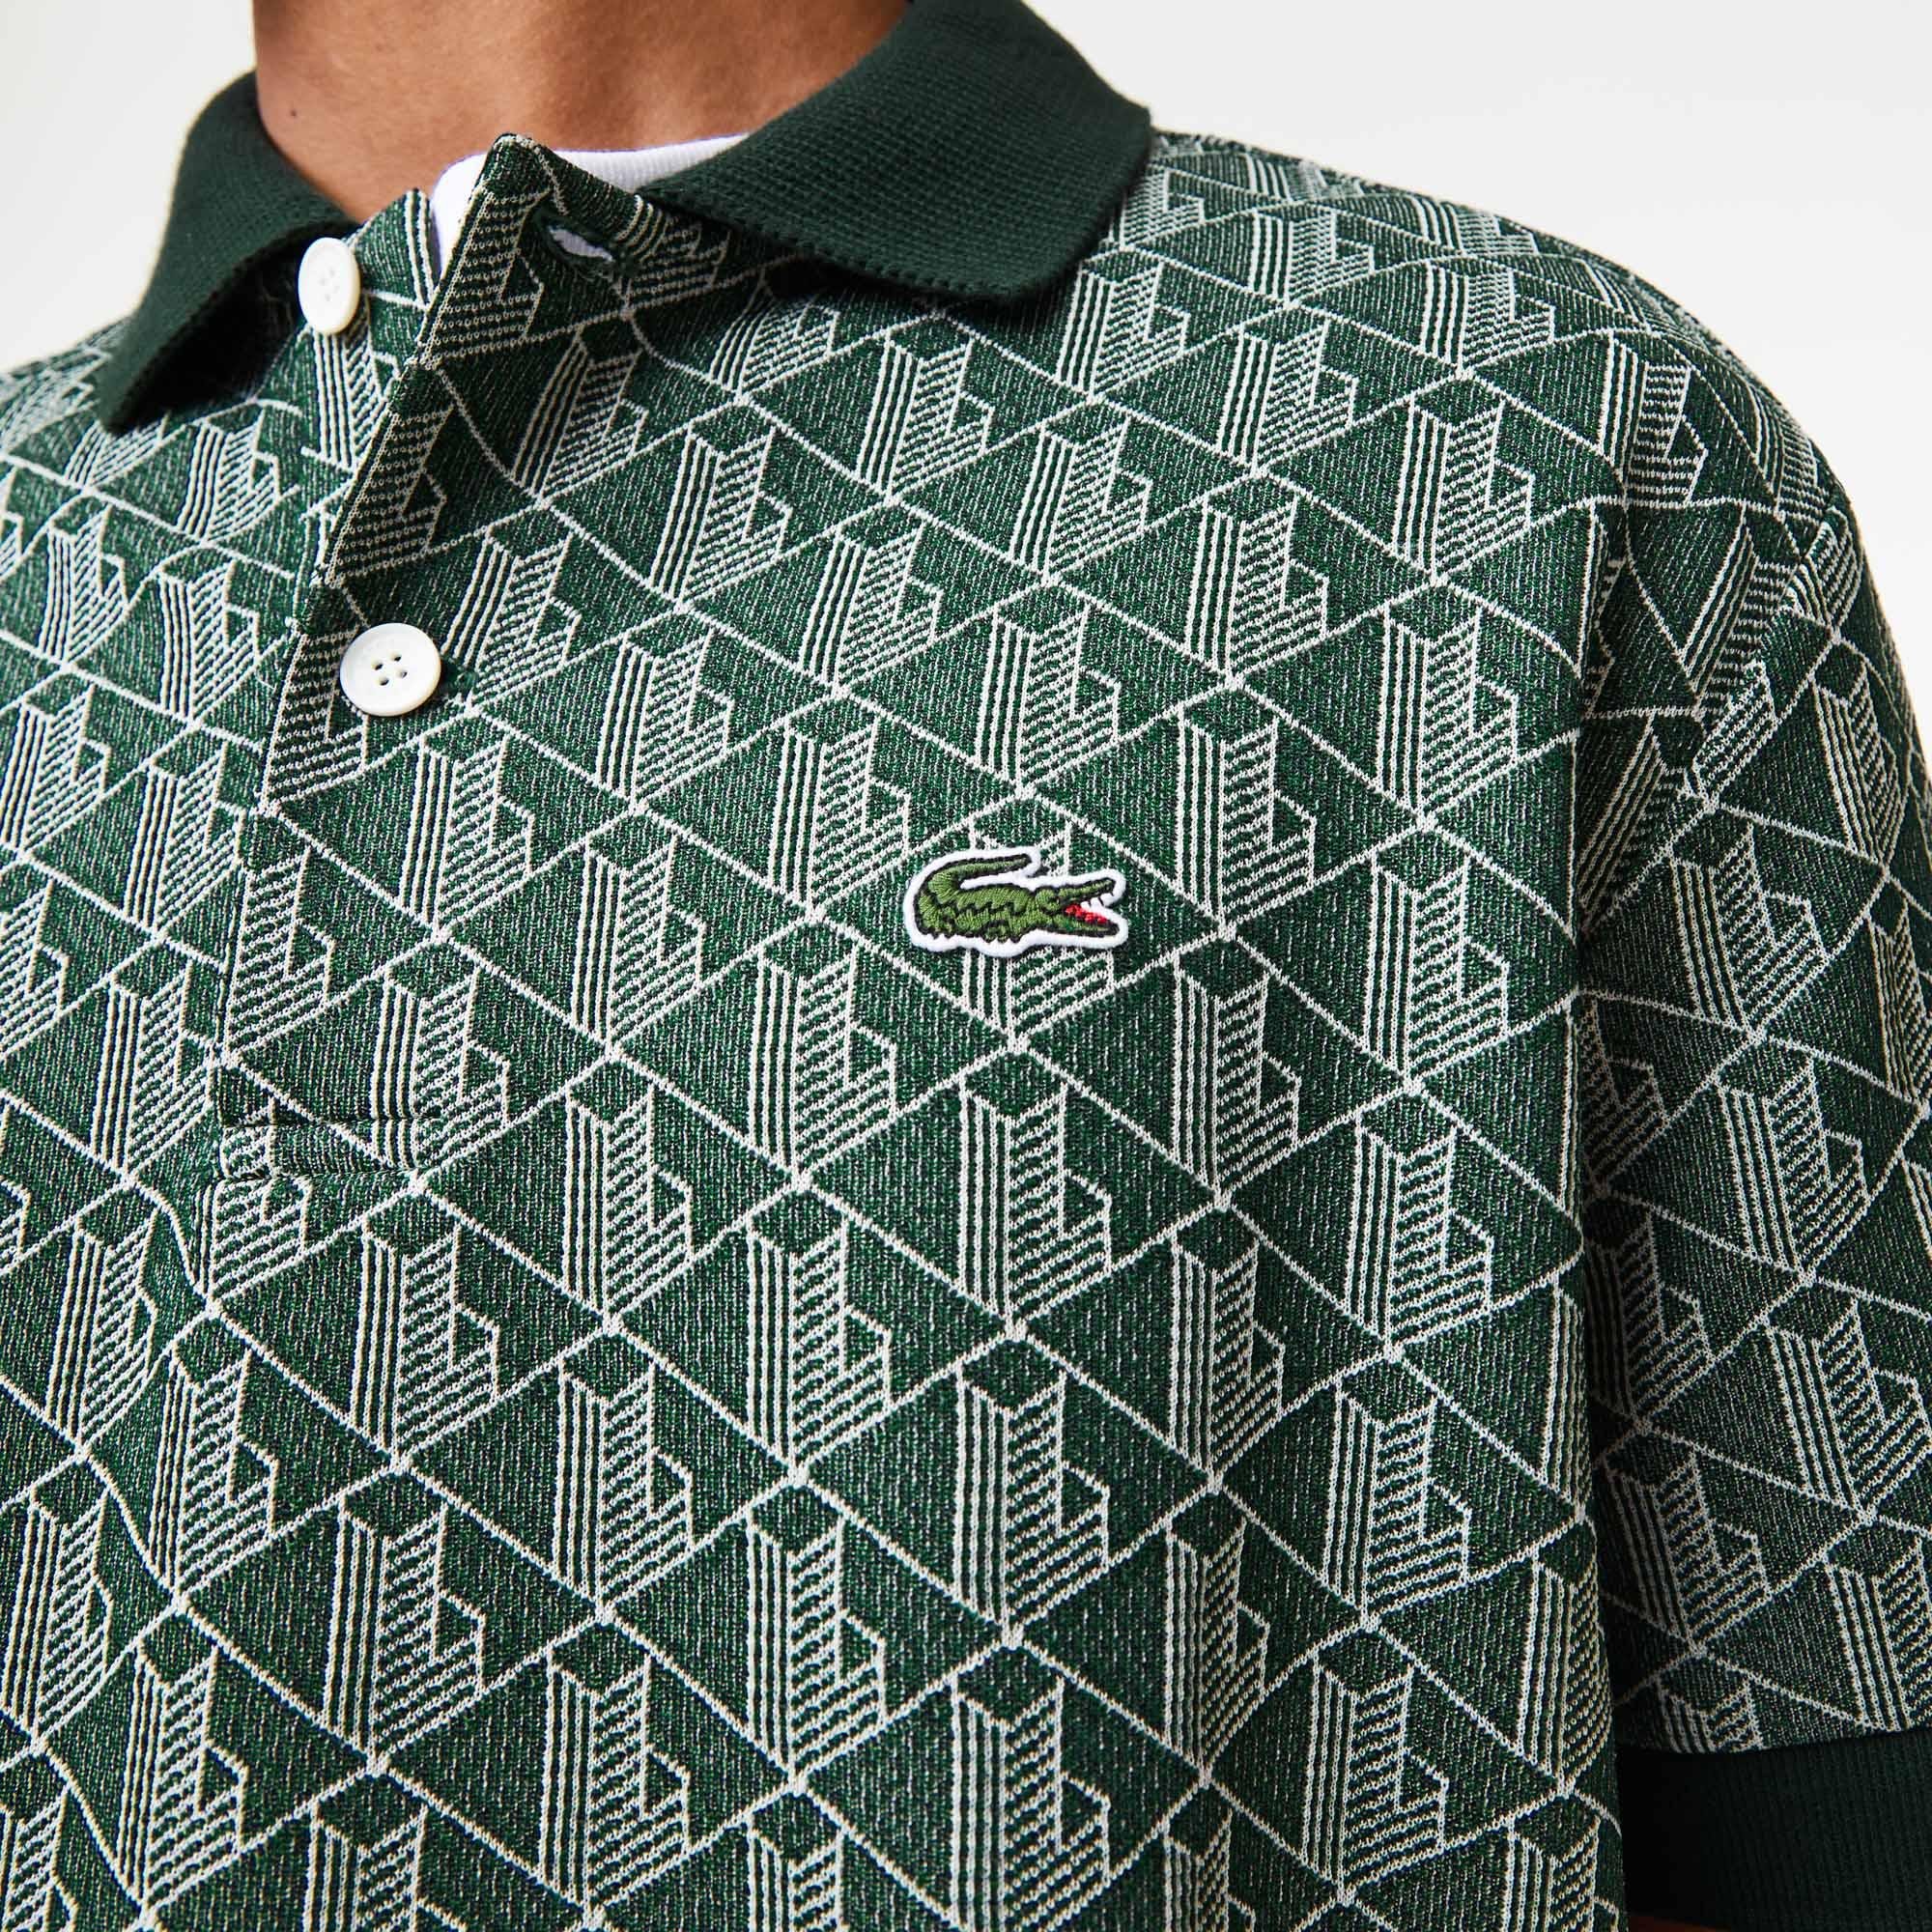 Lacoste Men's Classic Fit Monogram Print Contrast Collar Polo Shirt